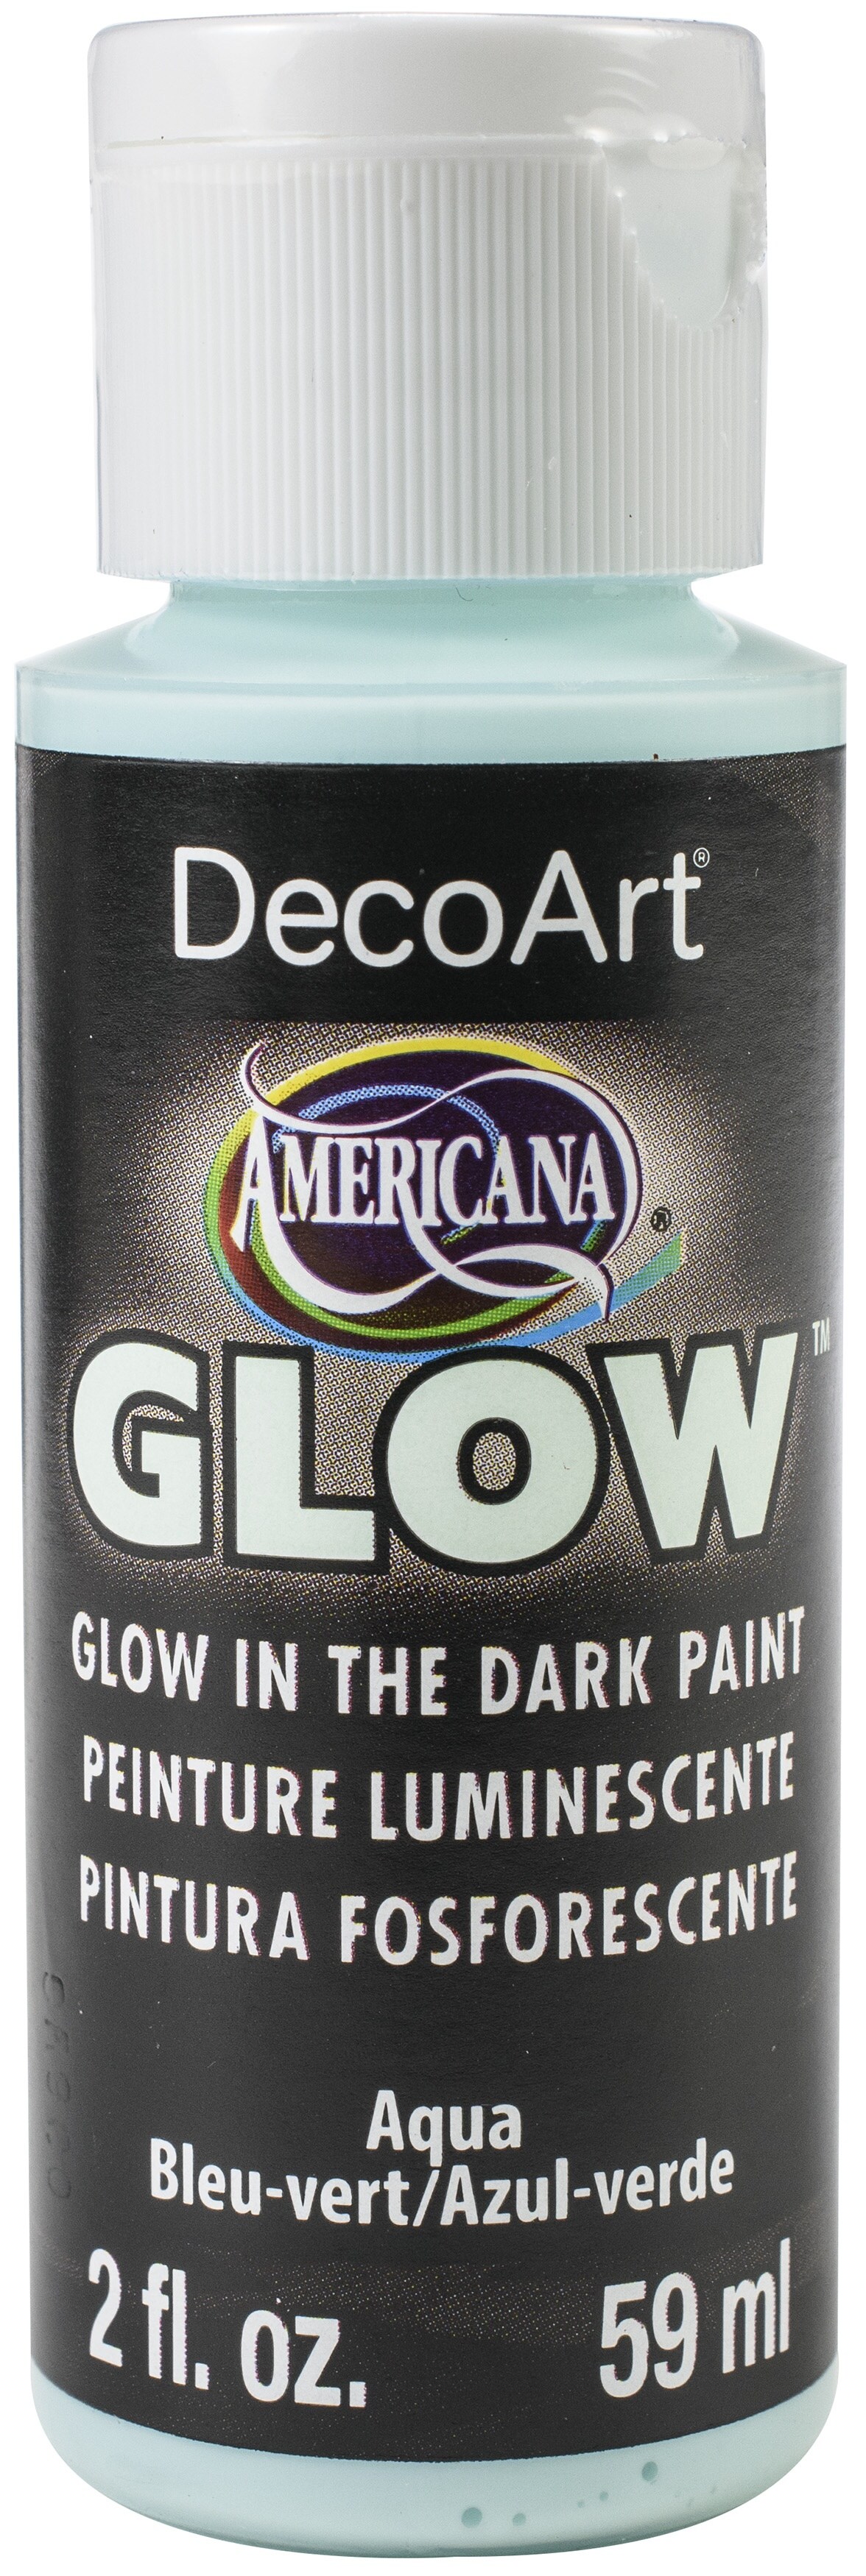 Aqua Glow The Dark Paint